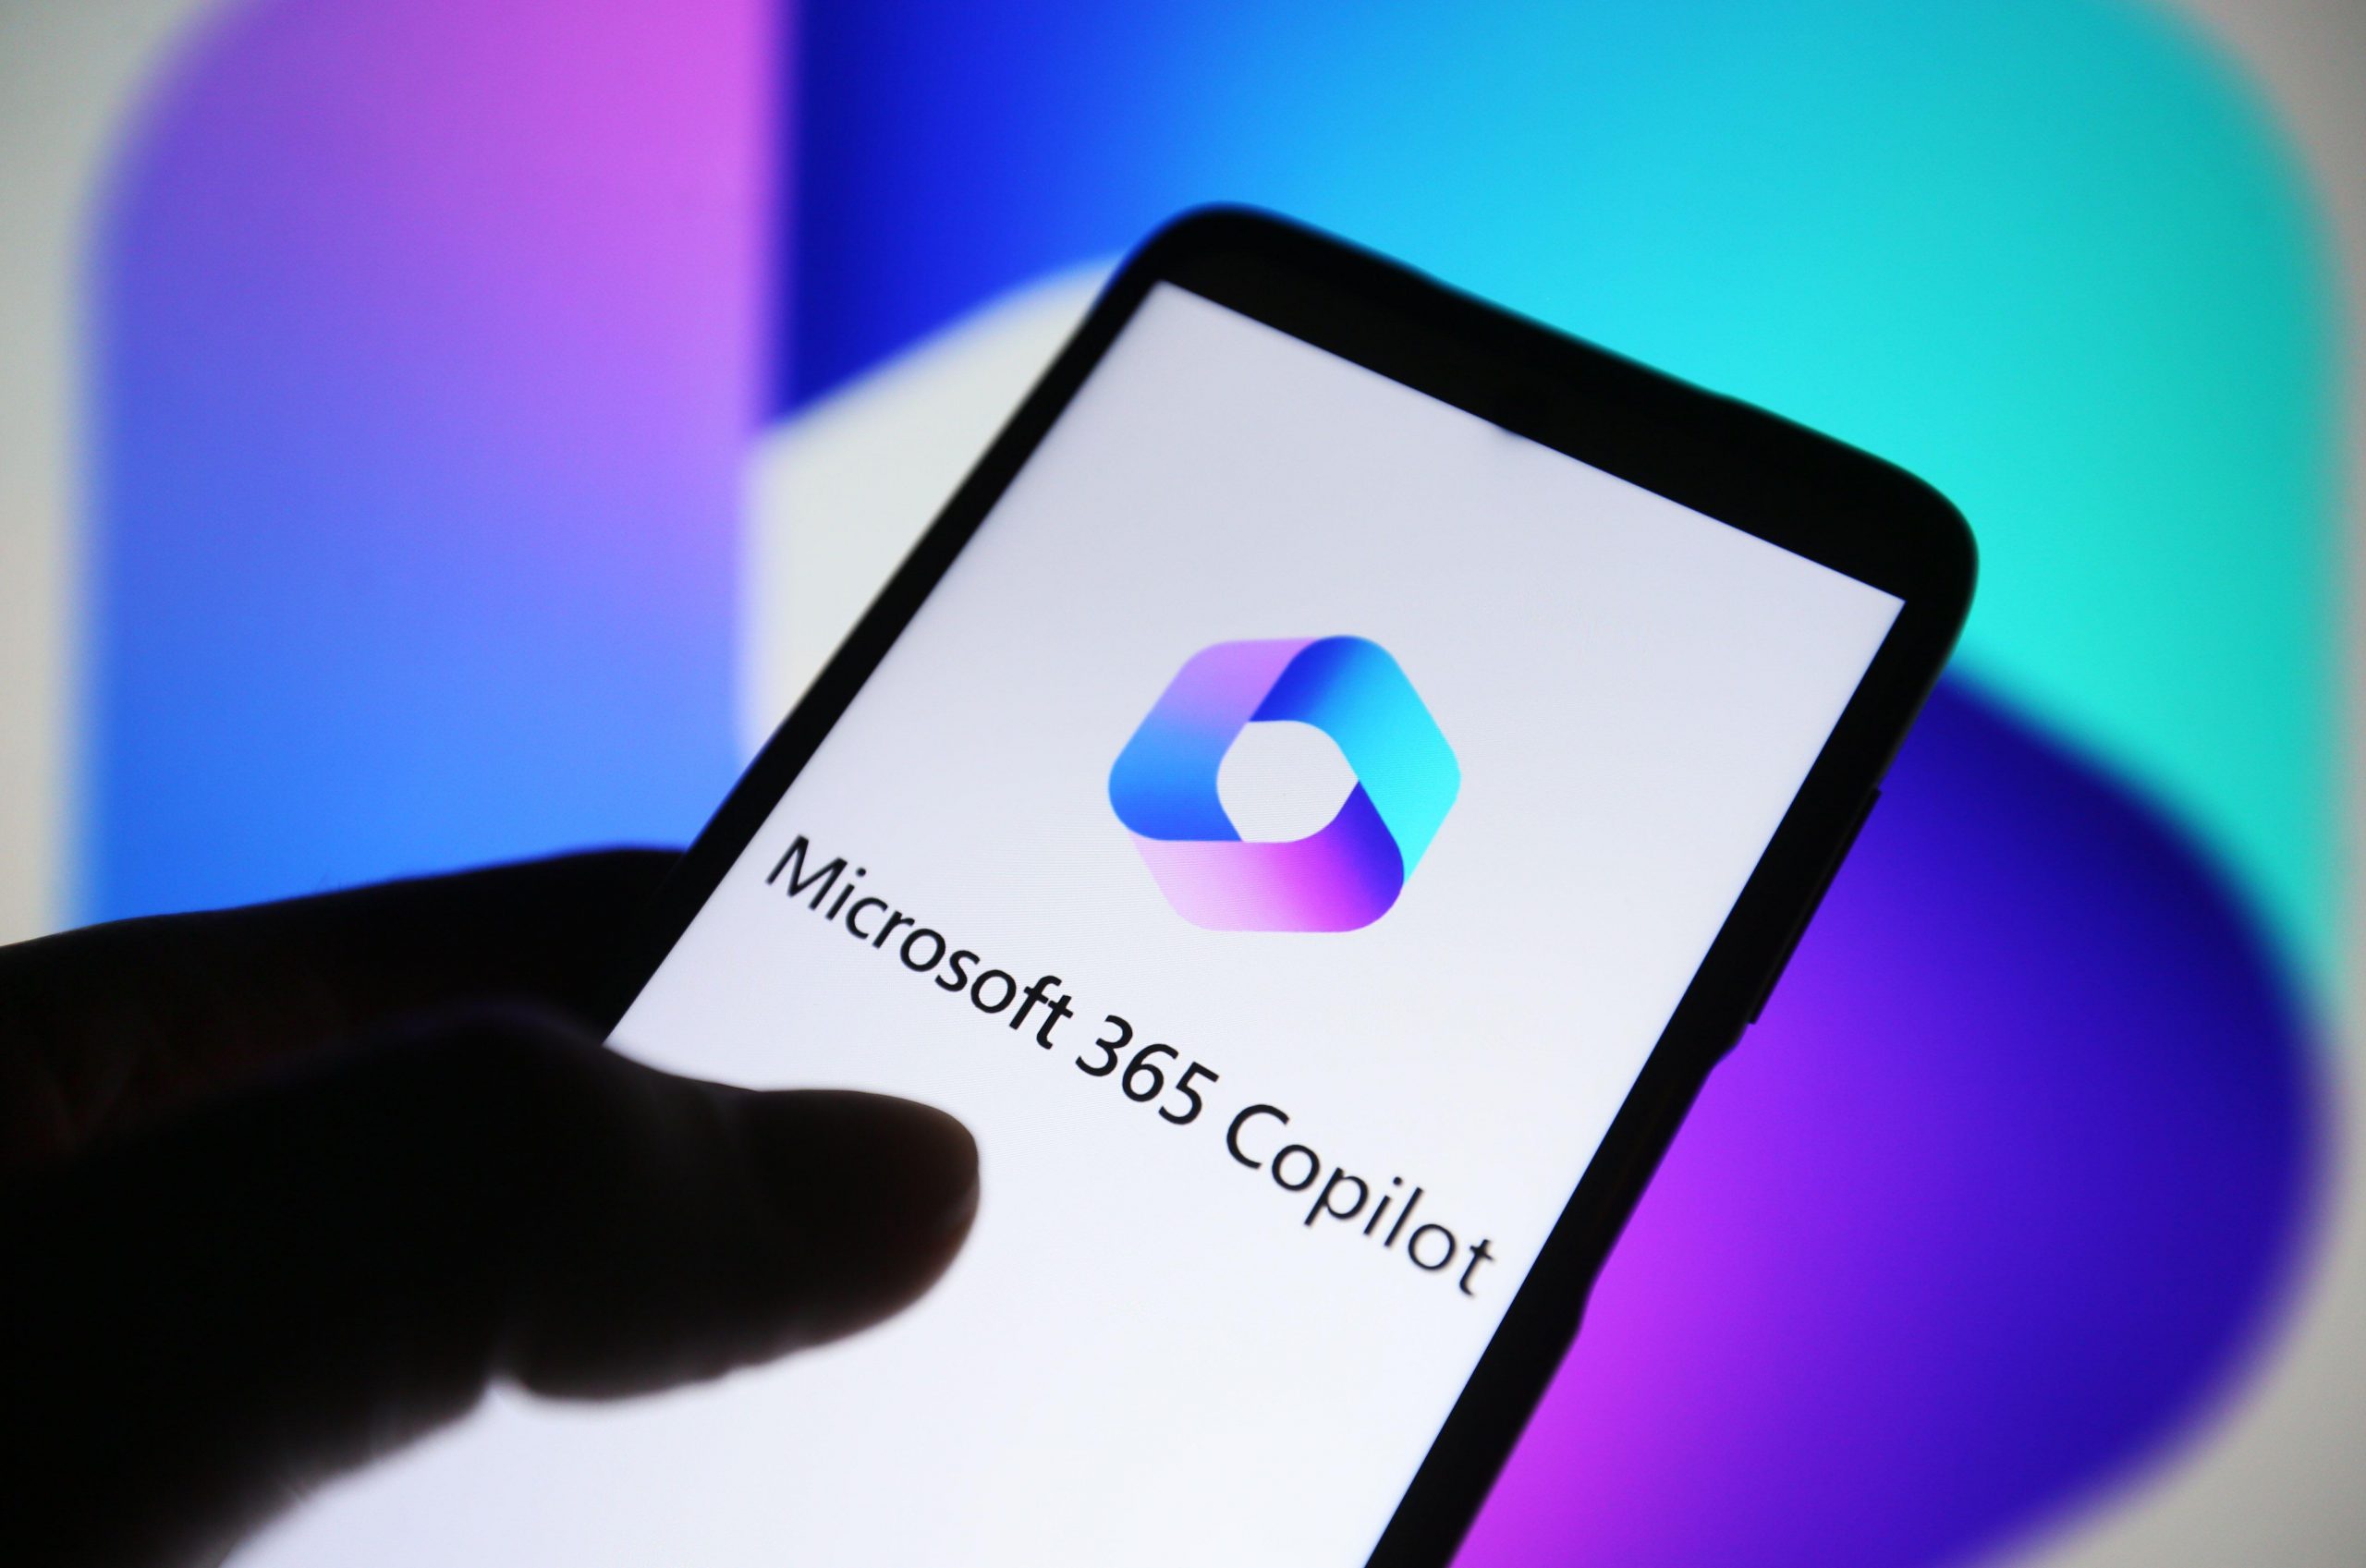 Microsoft Launches Copilot AI Assistant For OneDrive